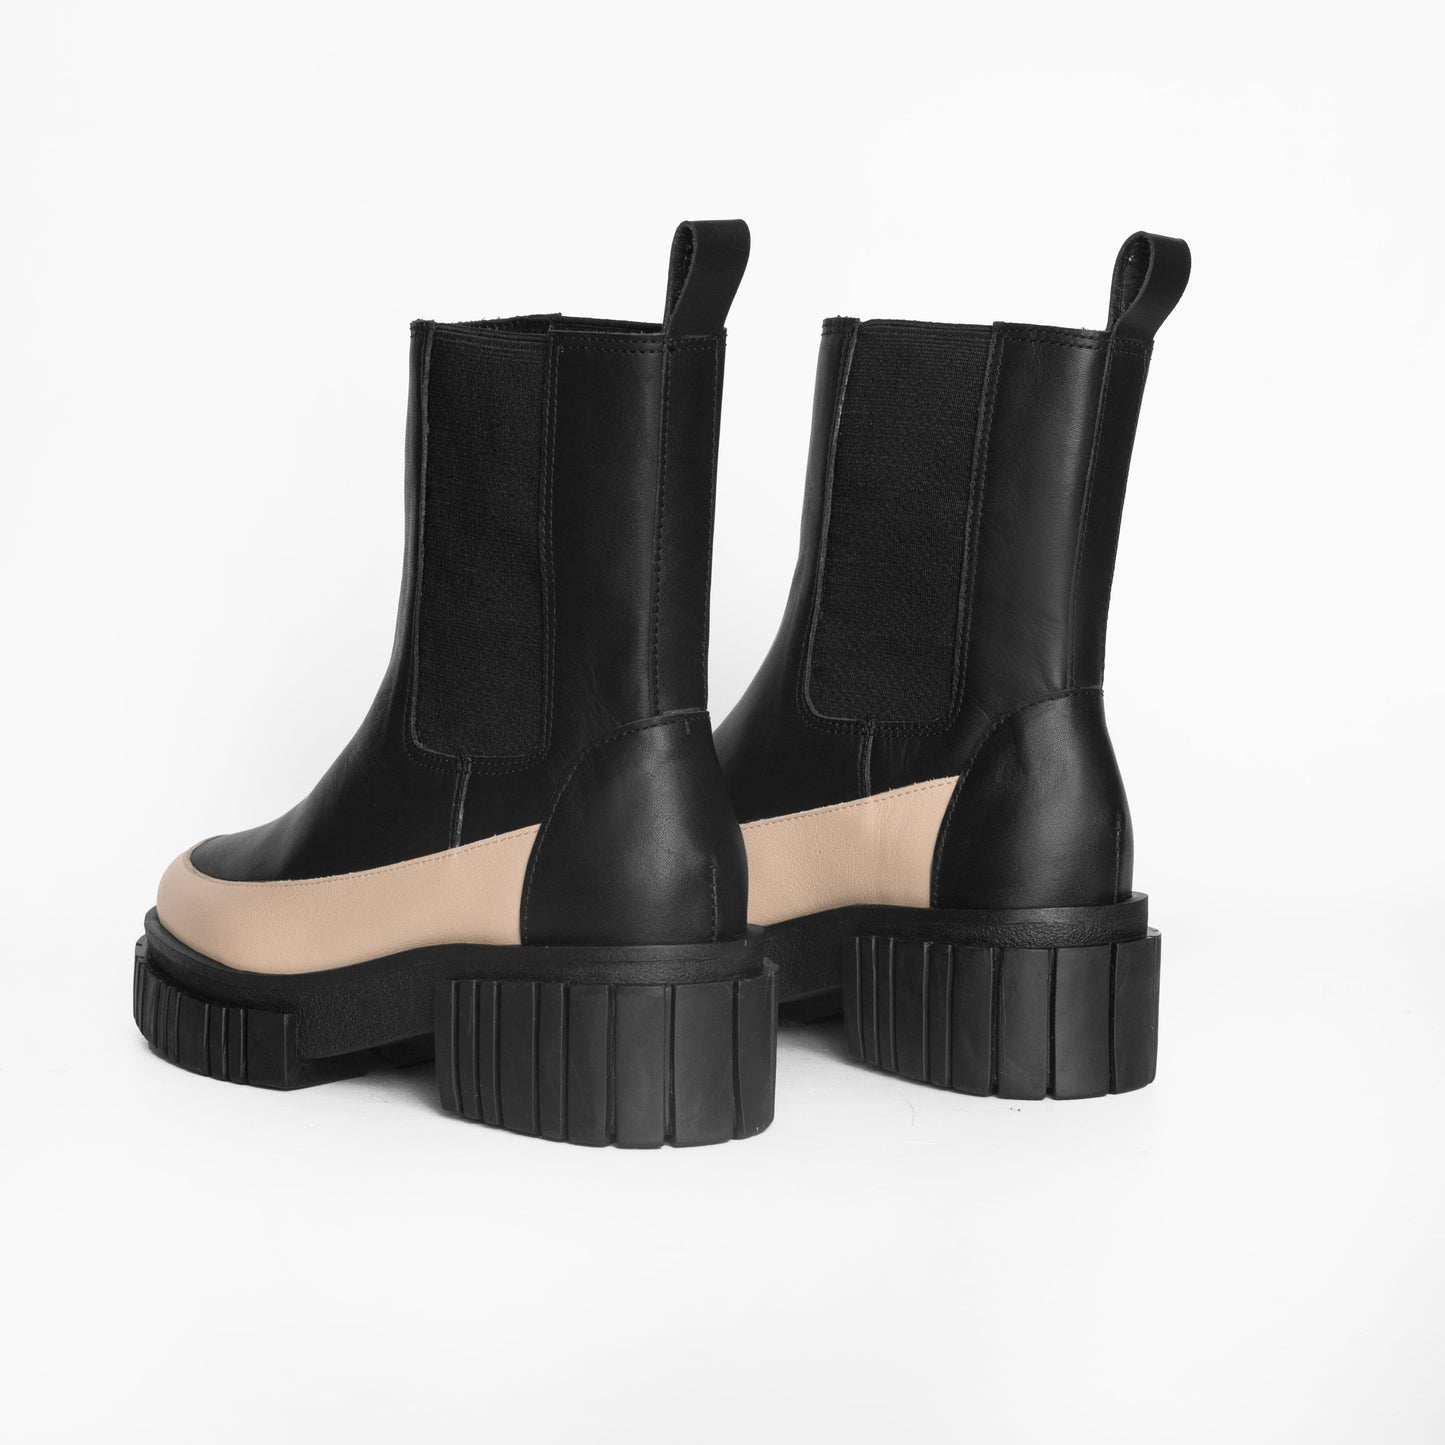 Vinci Shoes Celina Black Beige Chelsea Boot